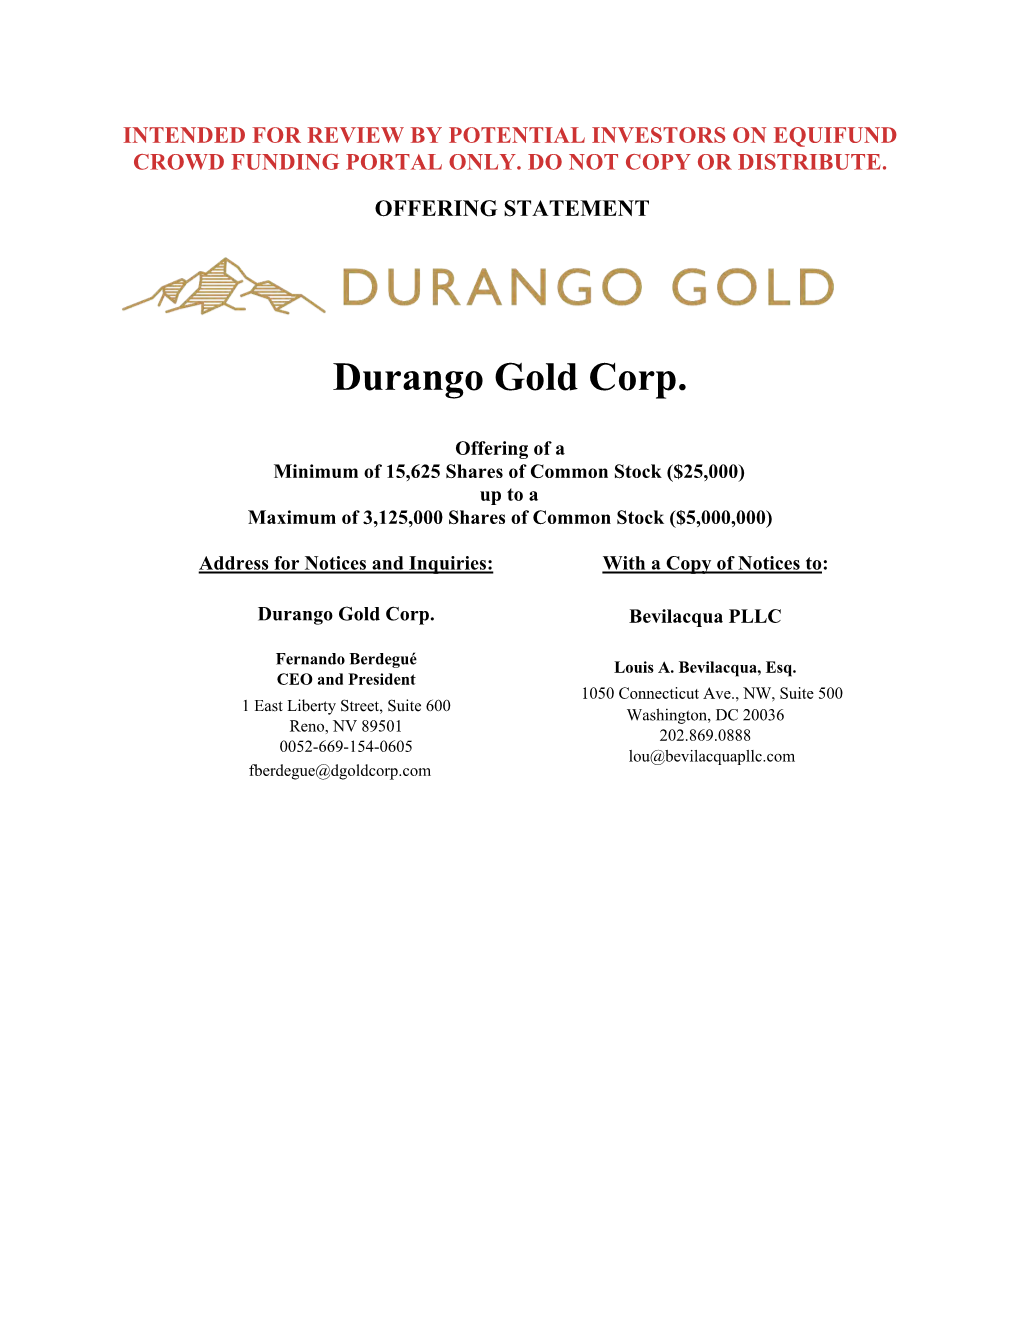 Durango Gold Corp